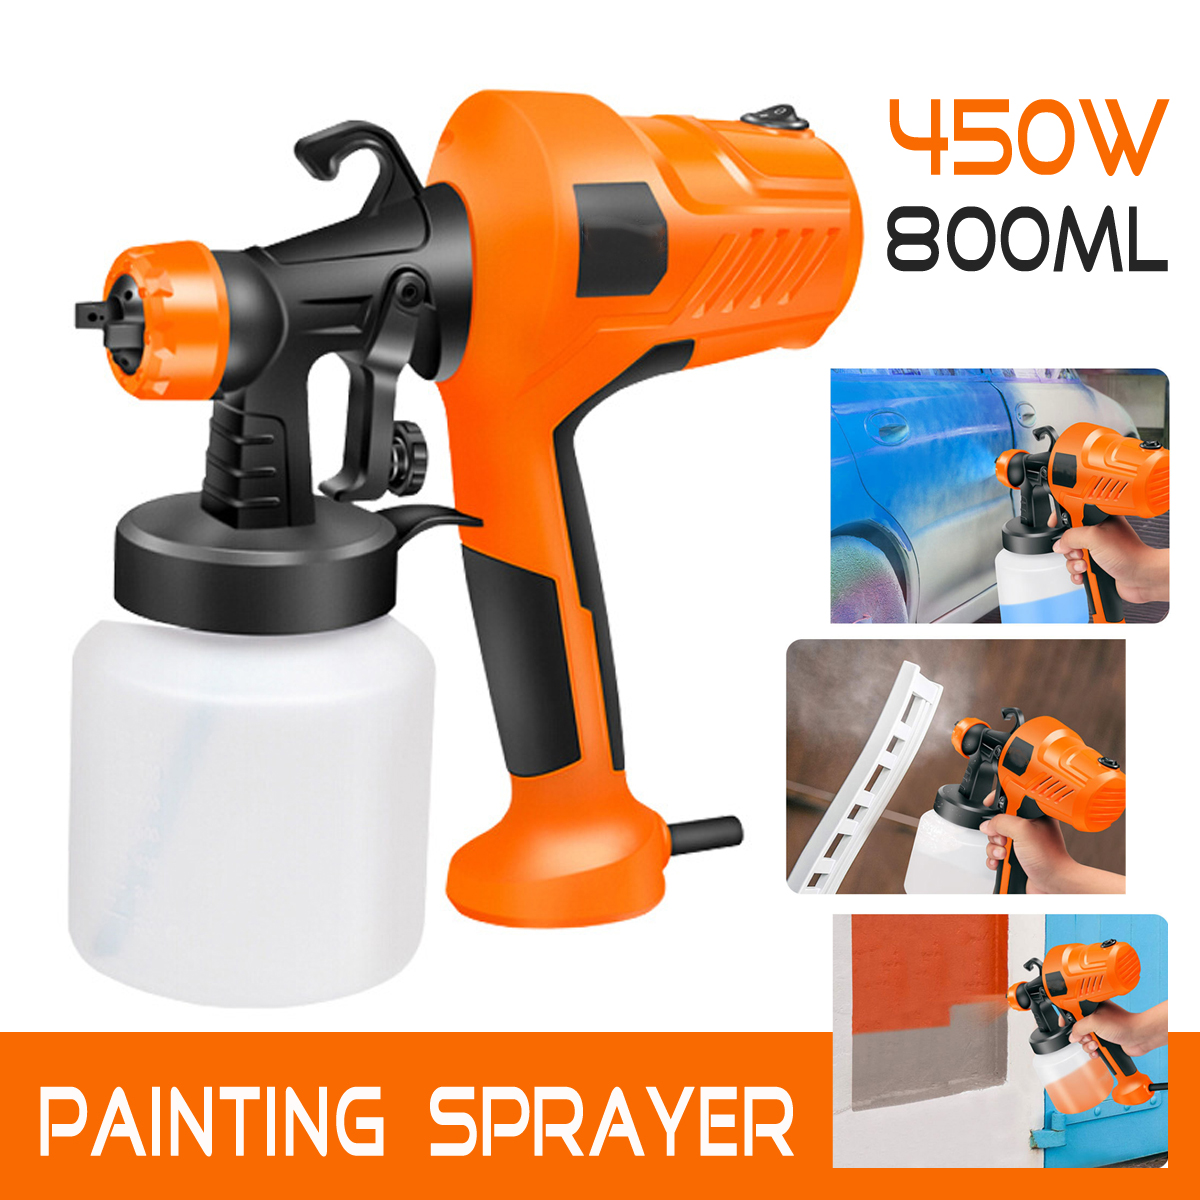 450W-800ML-Electric-Spray-Paint-Sprayer-Home-Car-Painting-Tool-Adjustable-Nozzle-Random-Color-1692630-2